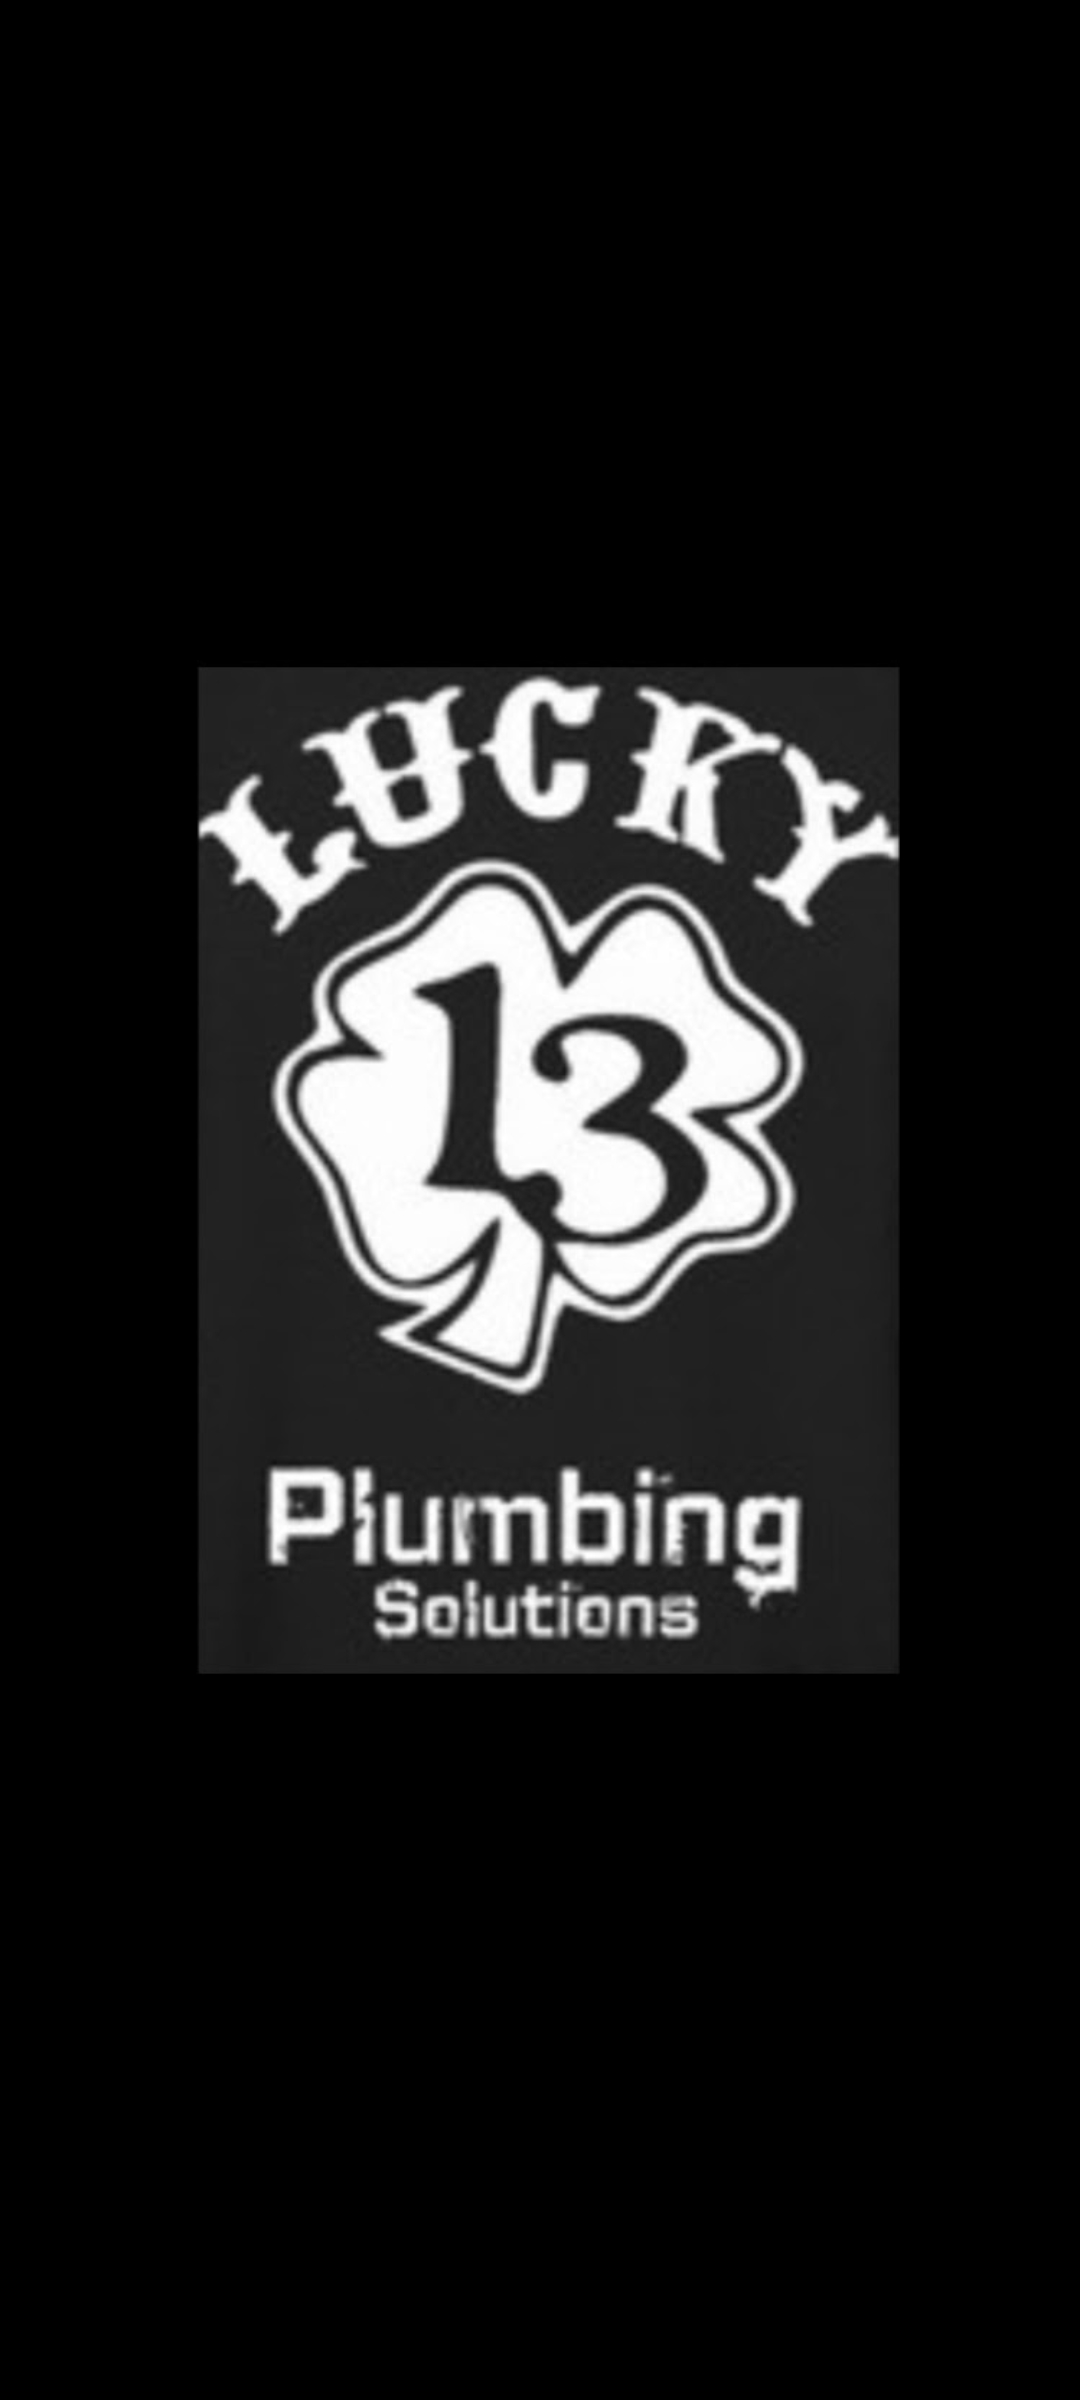 Lucky 13 Plumbing Solutions Company Logo